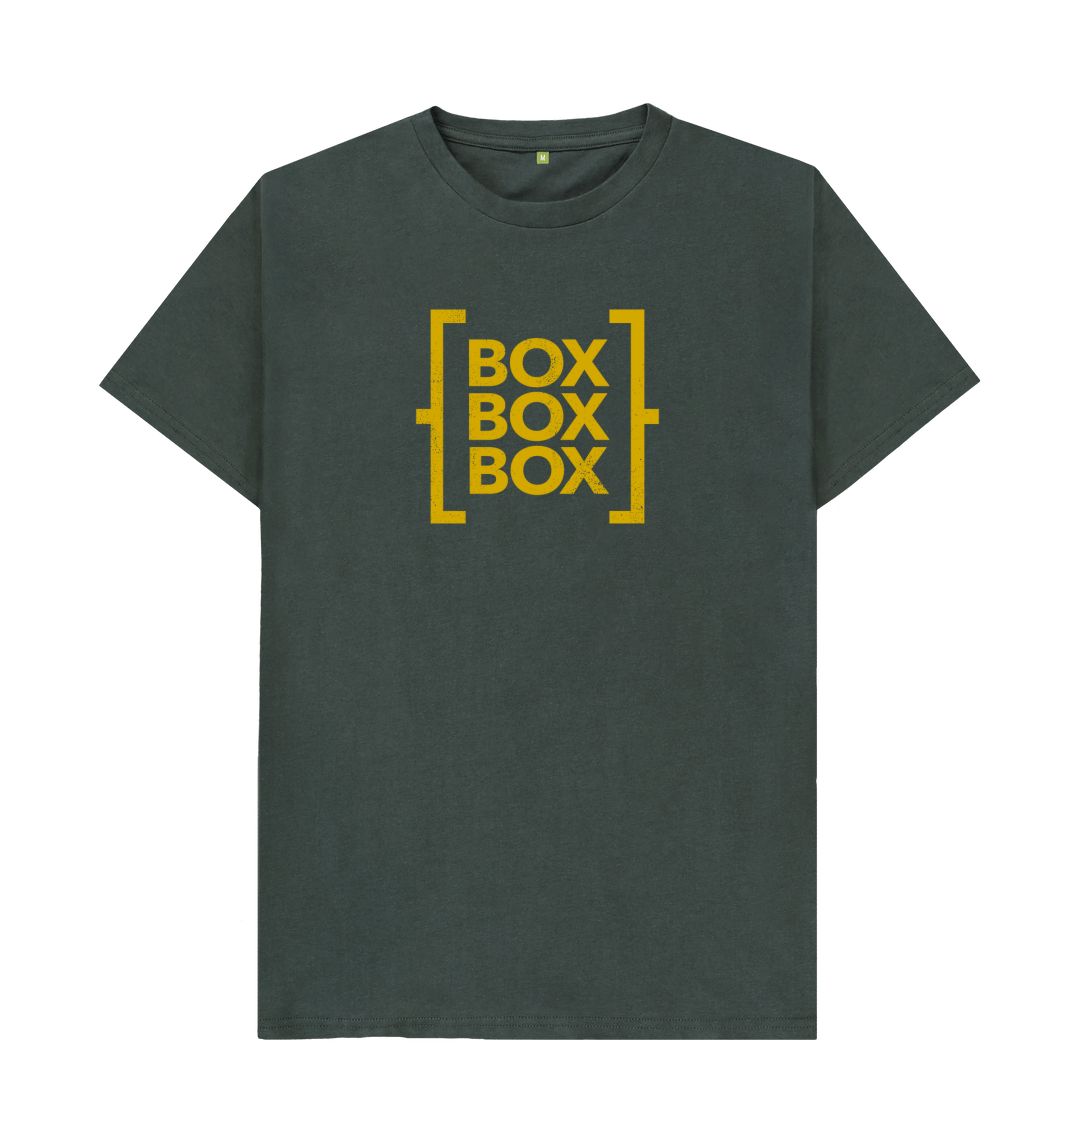 Dark Grey Box Box Box - The T-Shirt